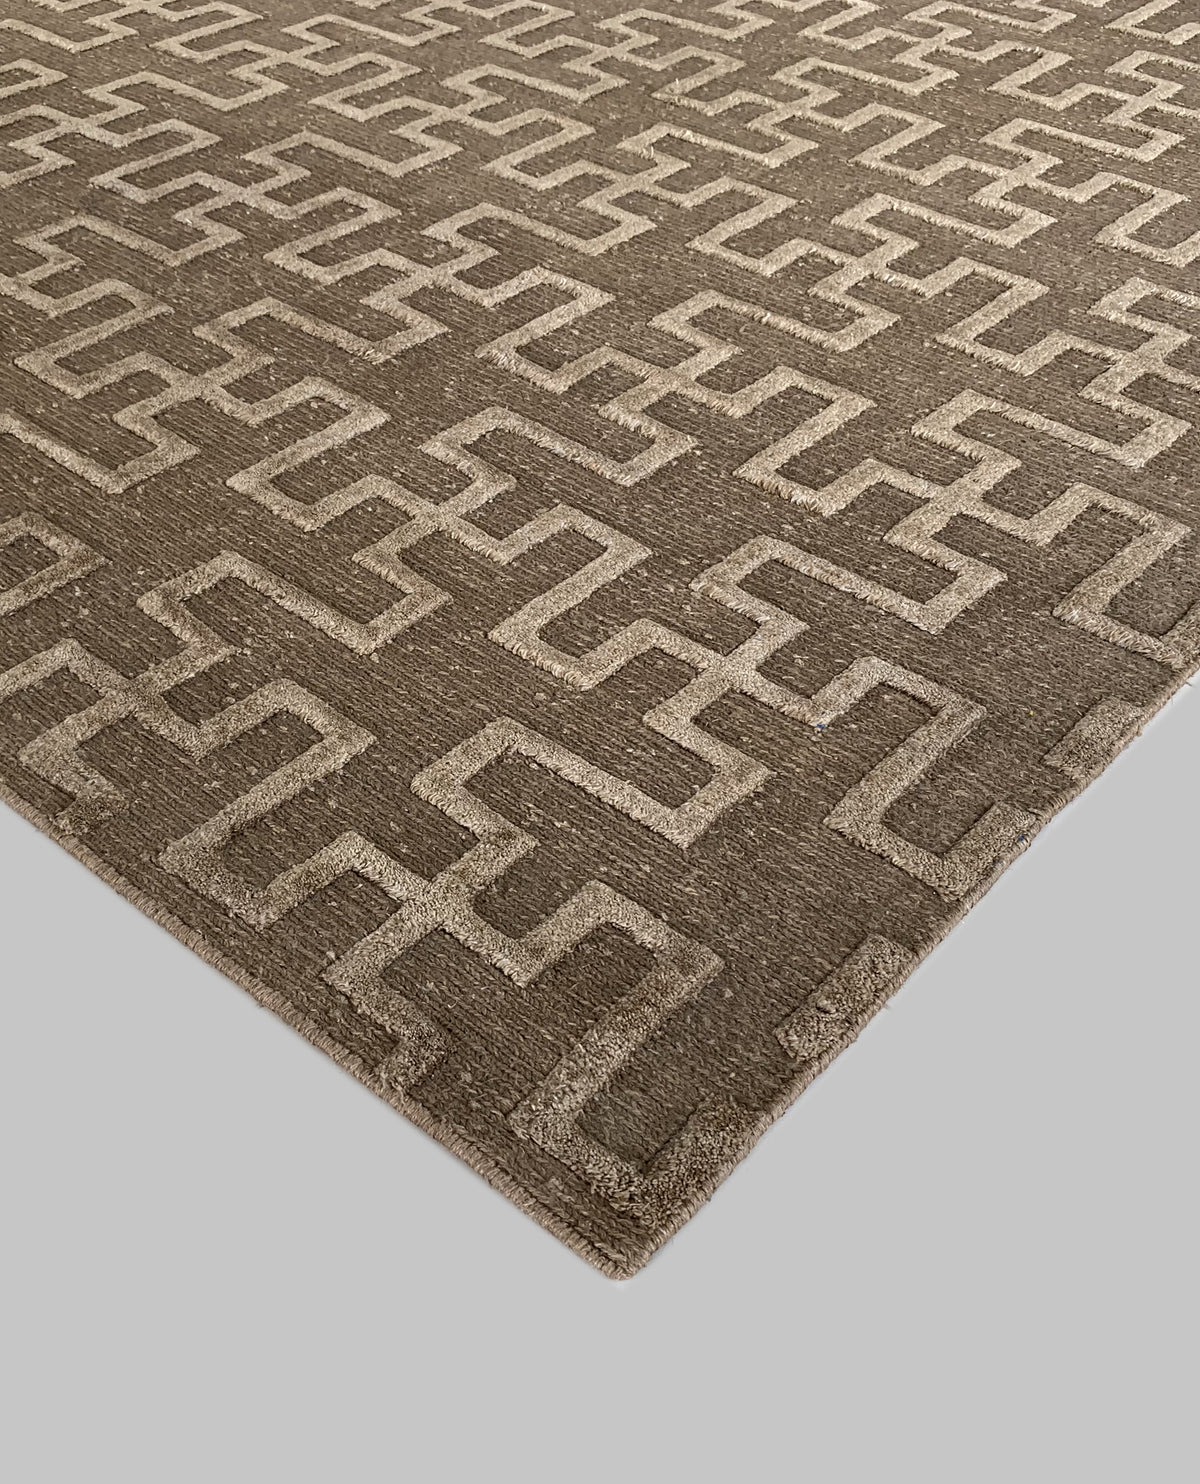 Rugslane Hand Knotted Sumack Weave Beige 100% Wool Trellis Design Luxurious Carpet 5ft X 8ft